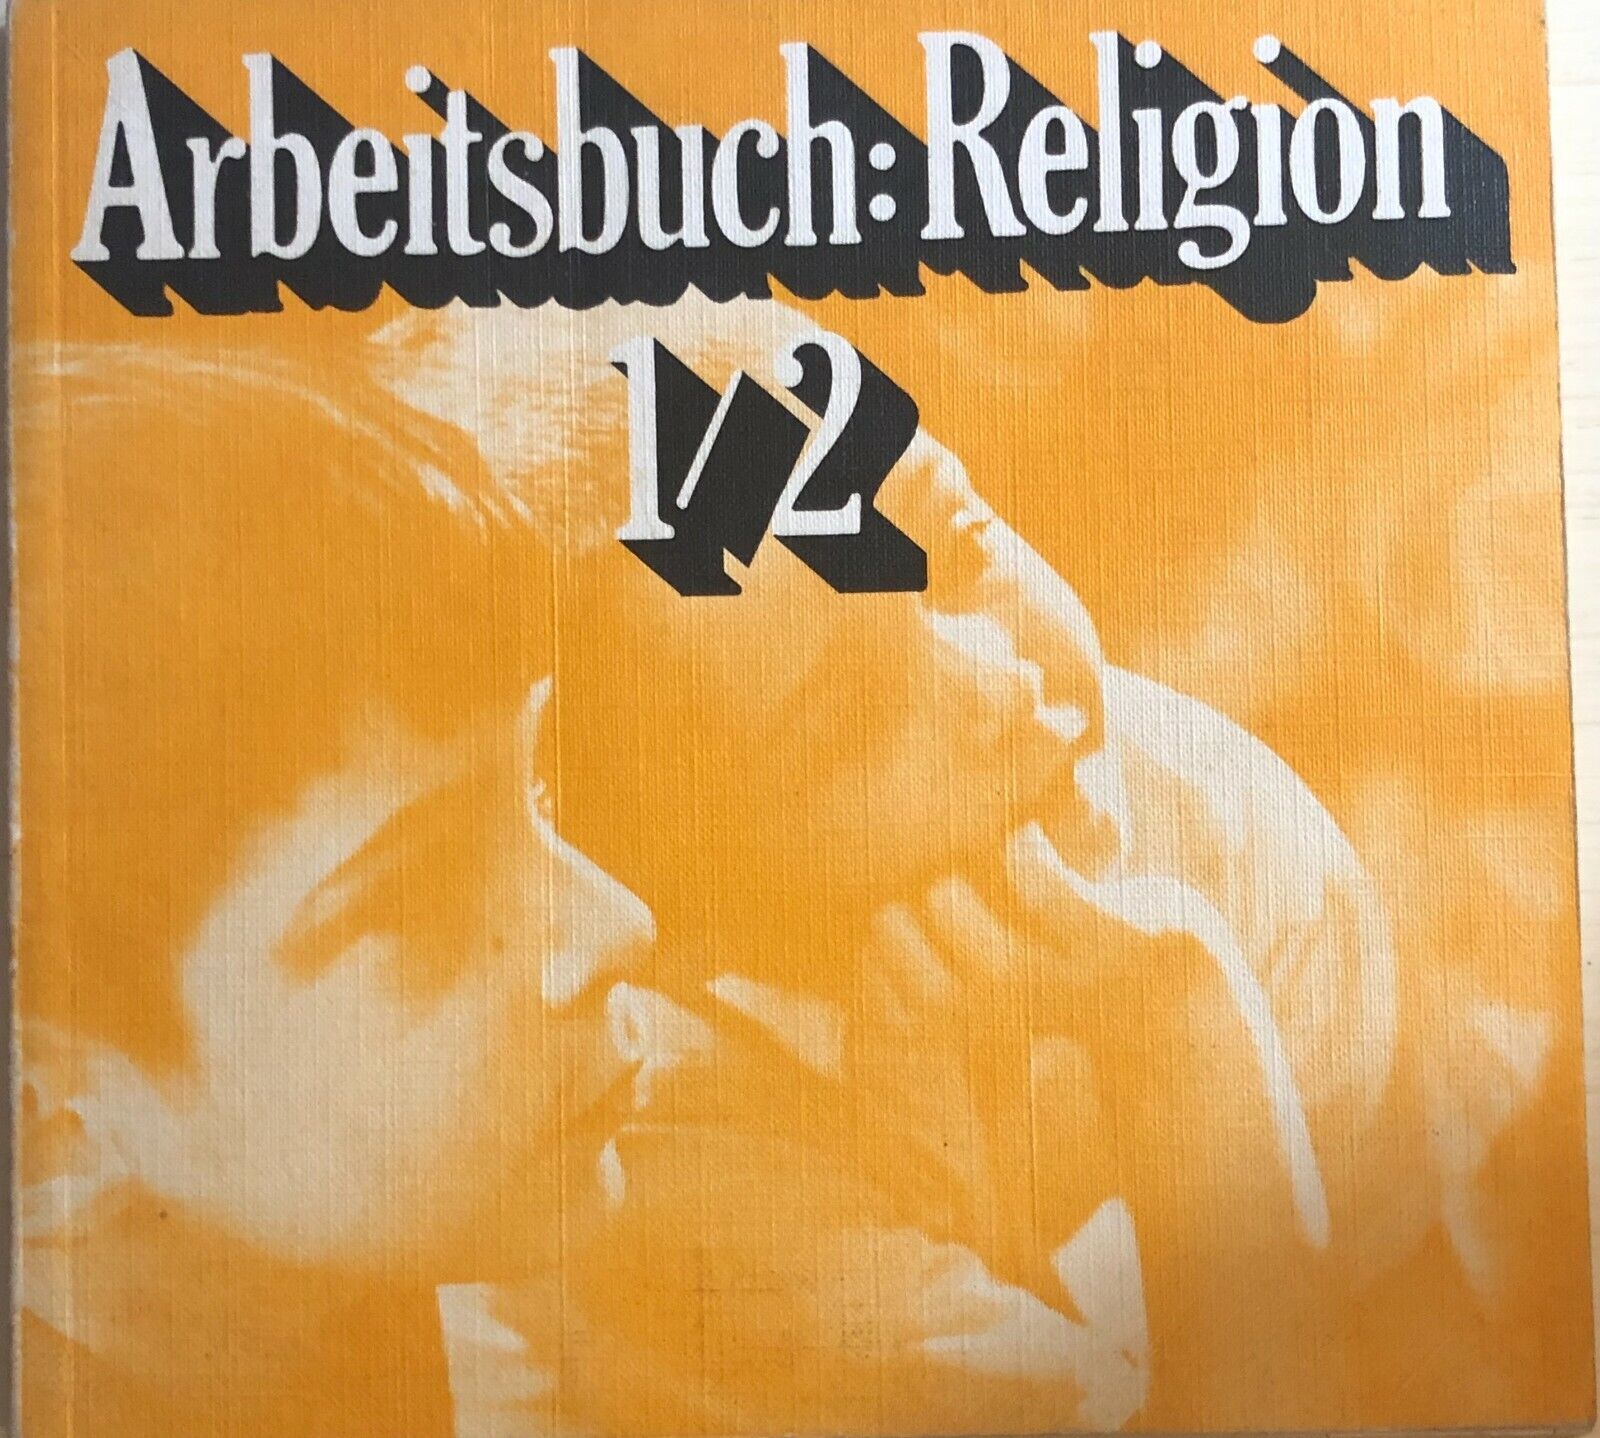 Arbetisbuch: Religion 1/2 di Aa.vv., 1973, Bagel/vieweg